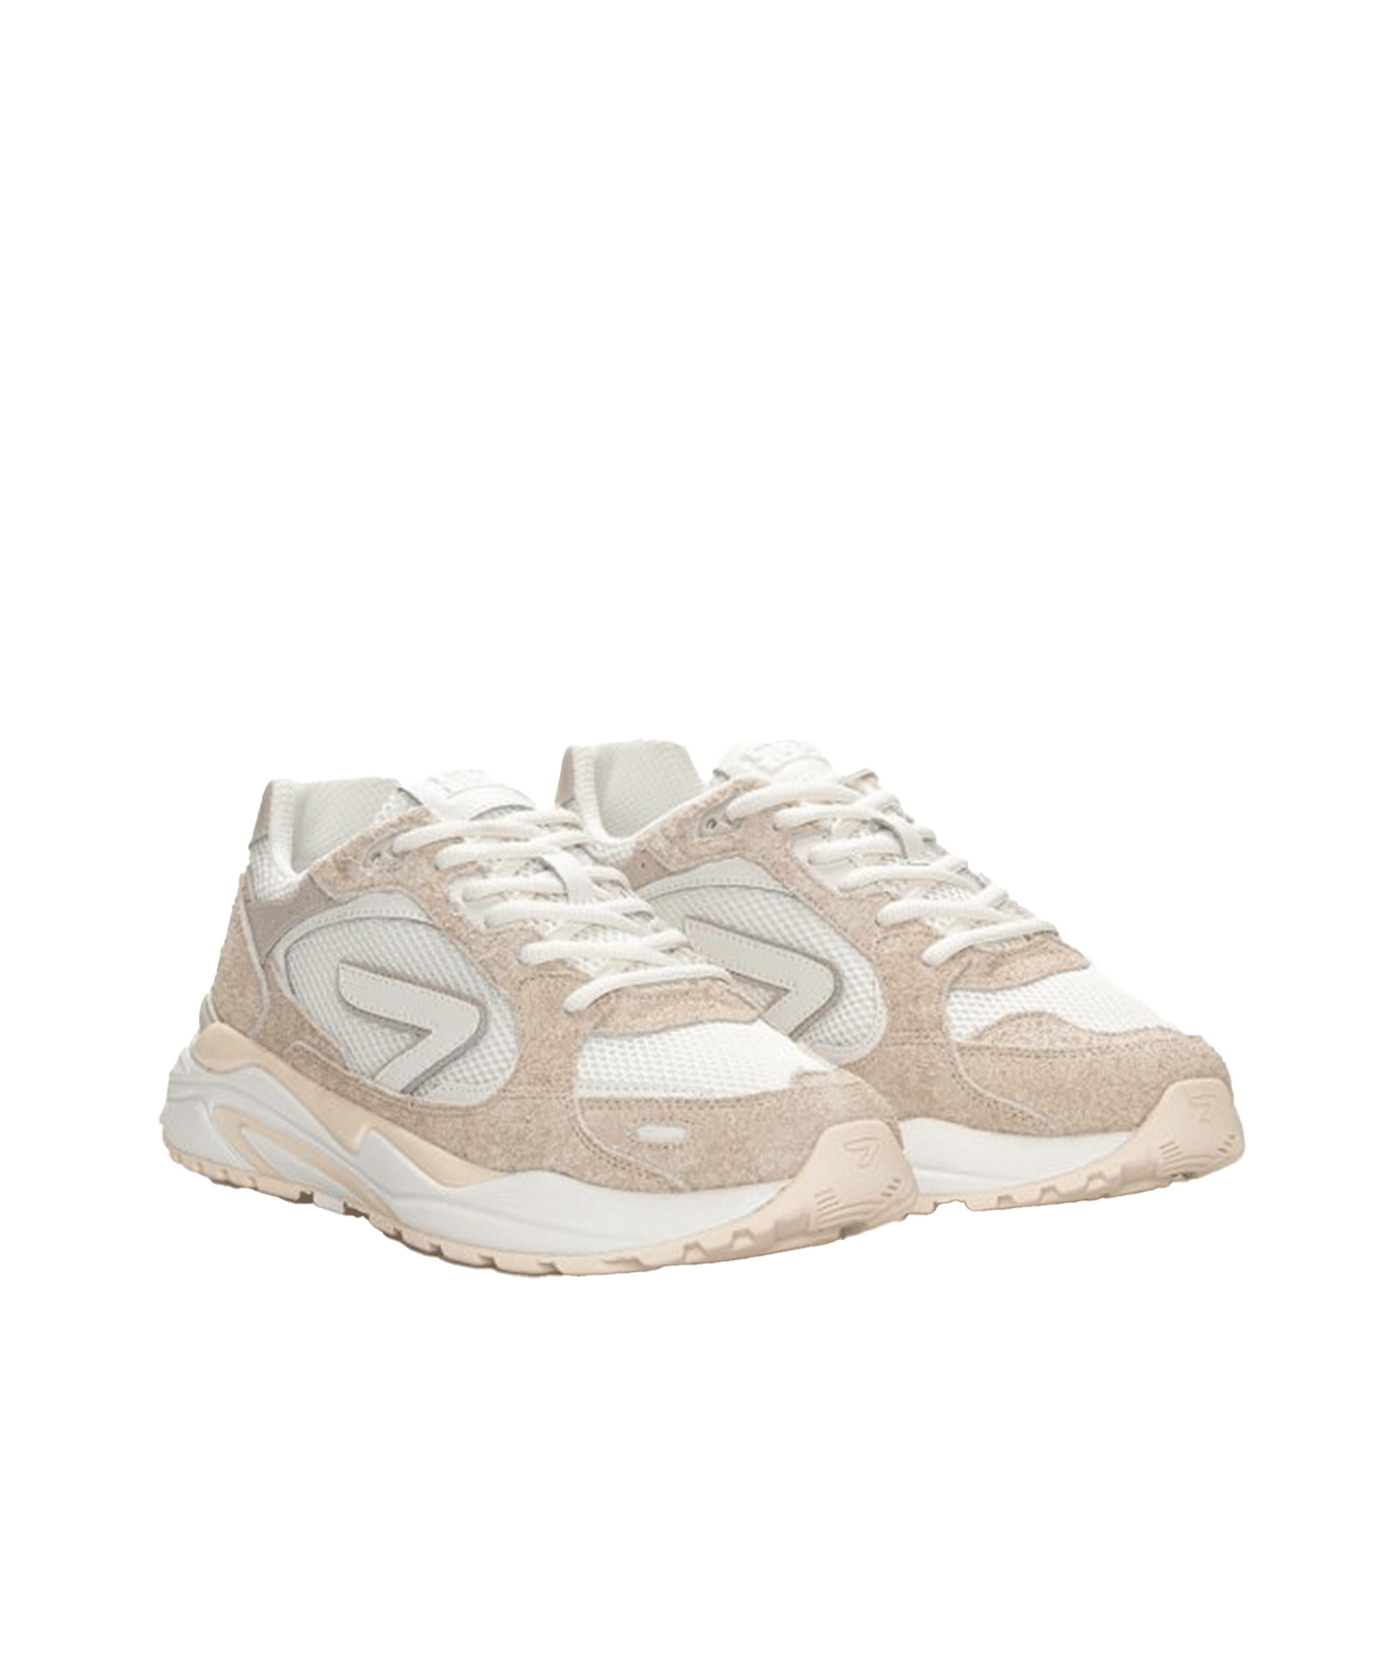 HUB Footwear - Slam-m S50 - A50 Off White/bone